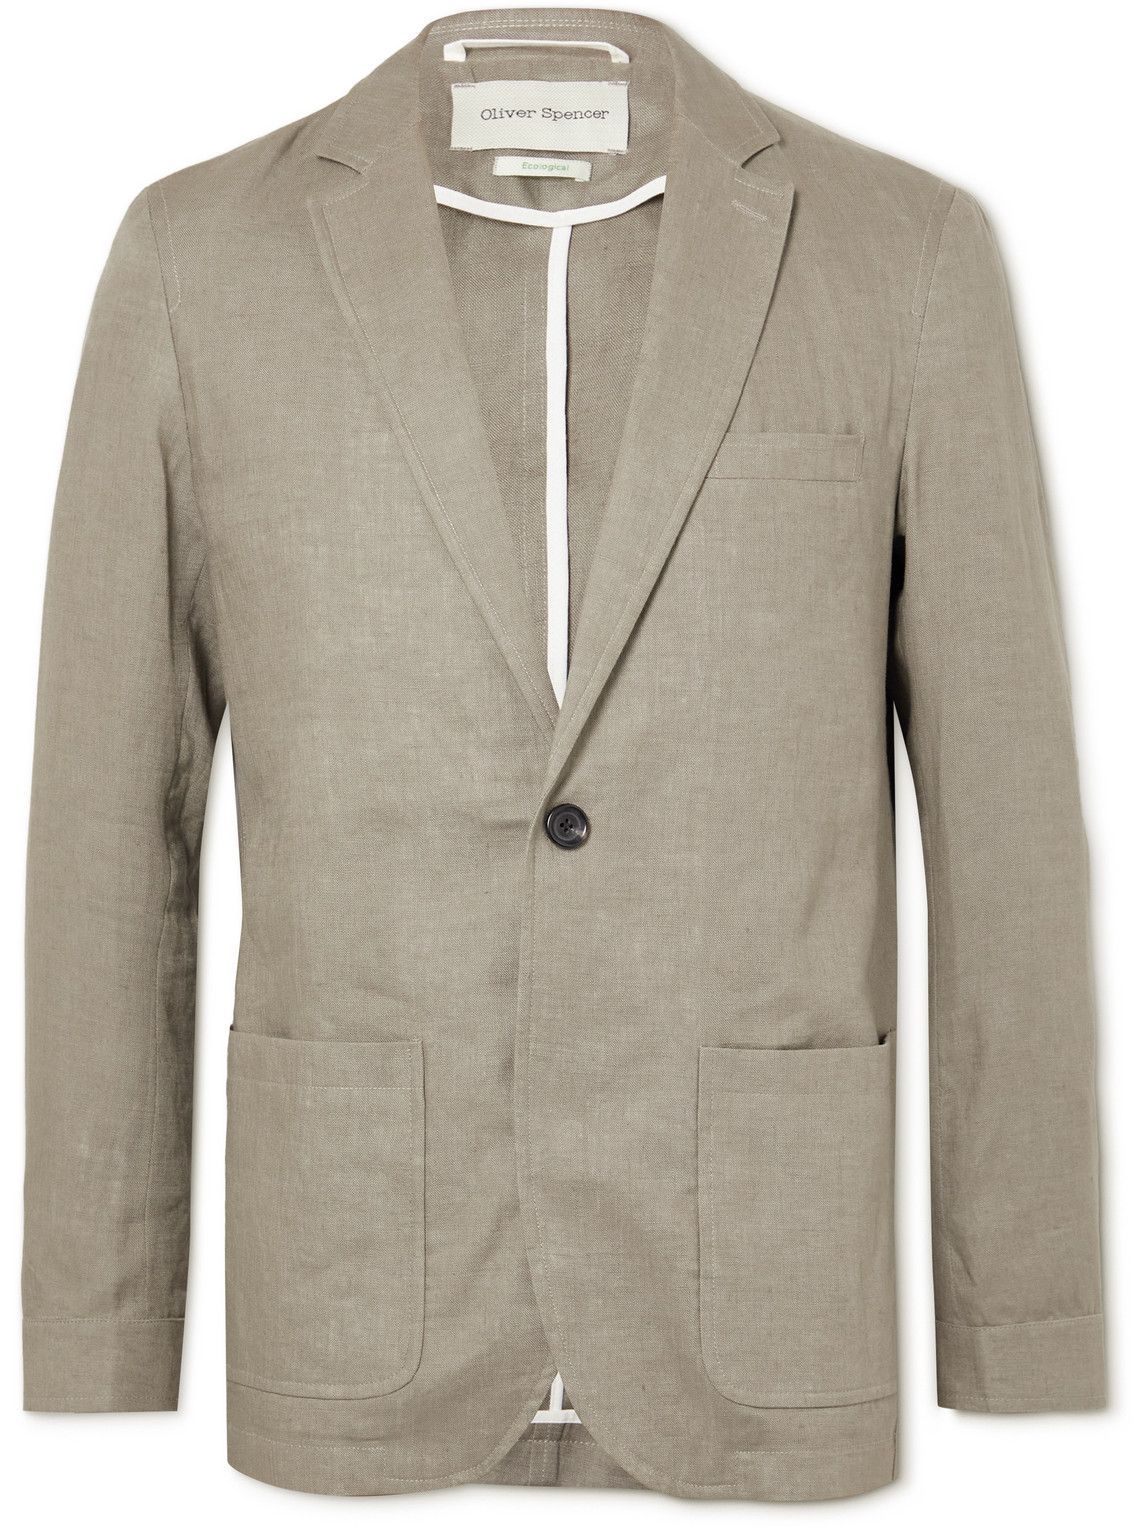 Oliver Spencer - Fairway Unstructured Linen Suit Jacket - Gray